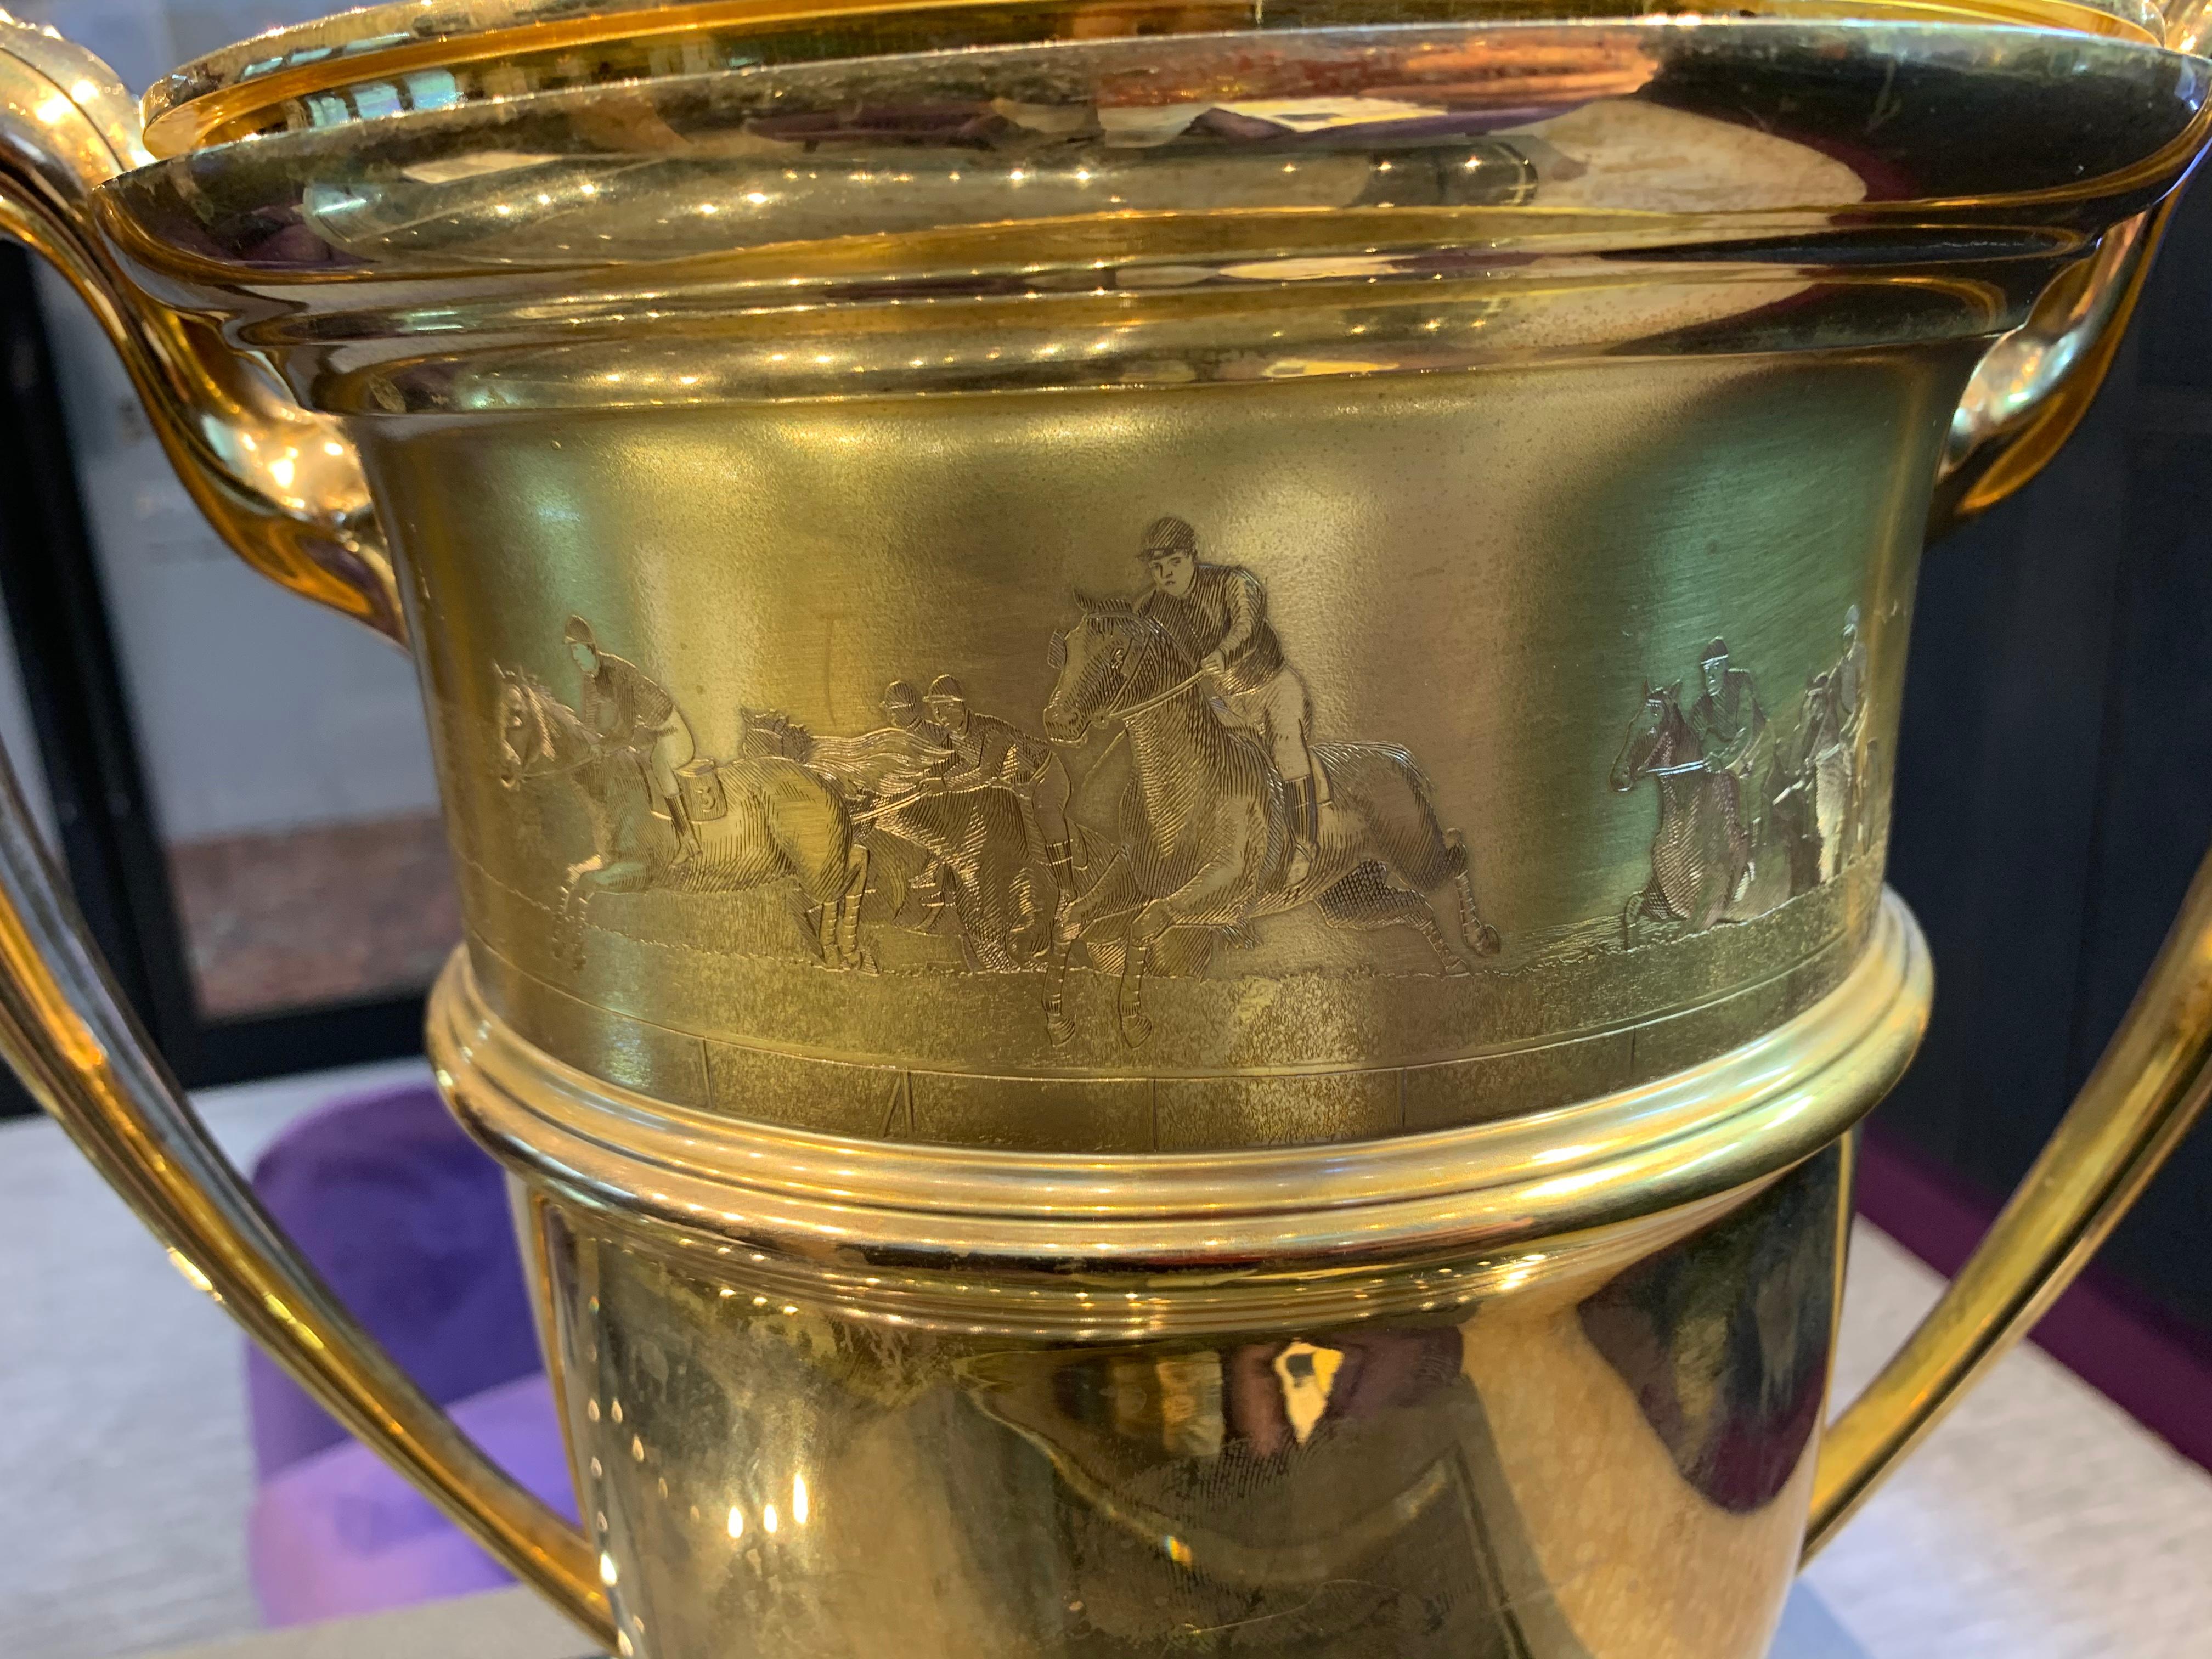 Historic Gold Equestrian Trophy 